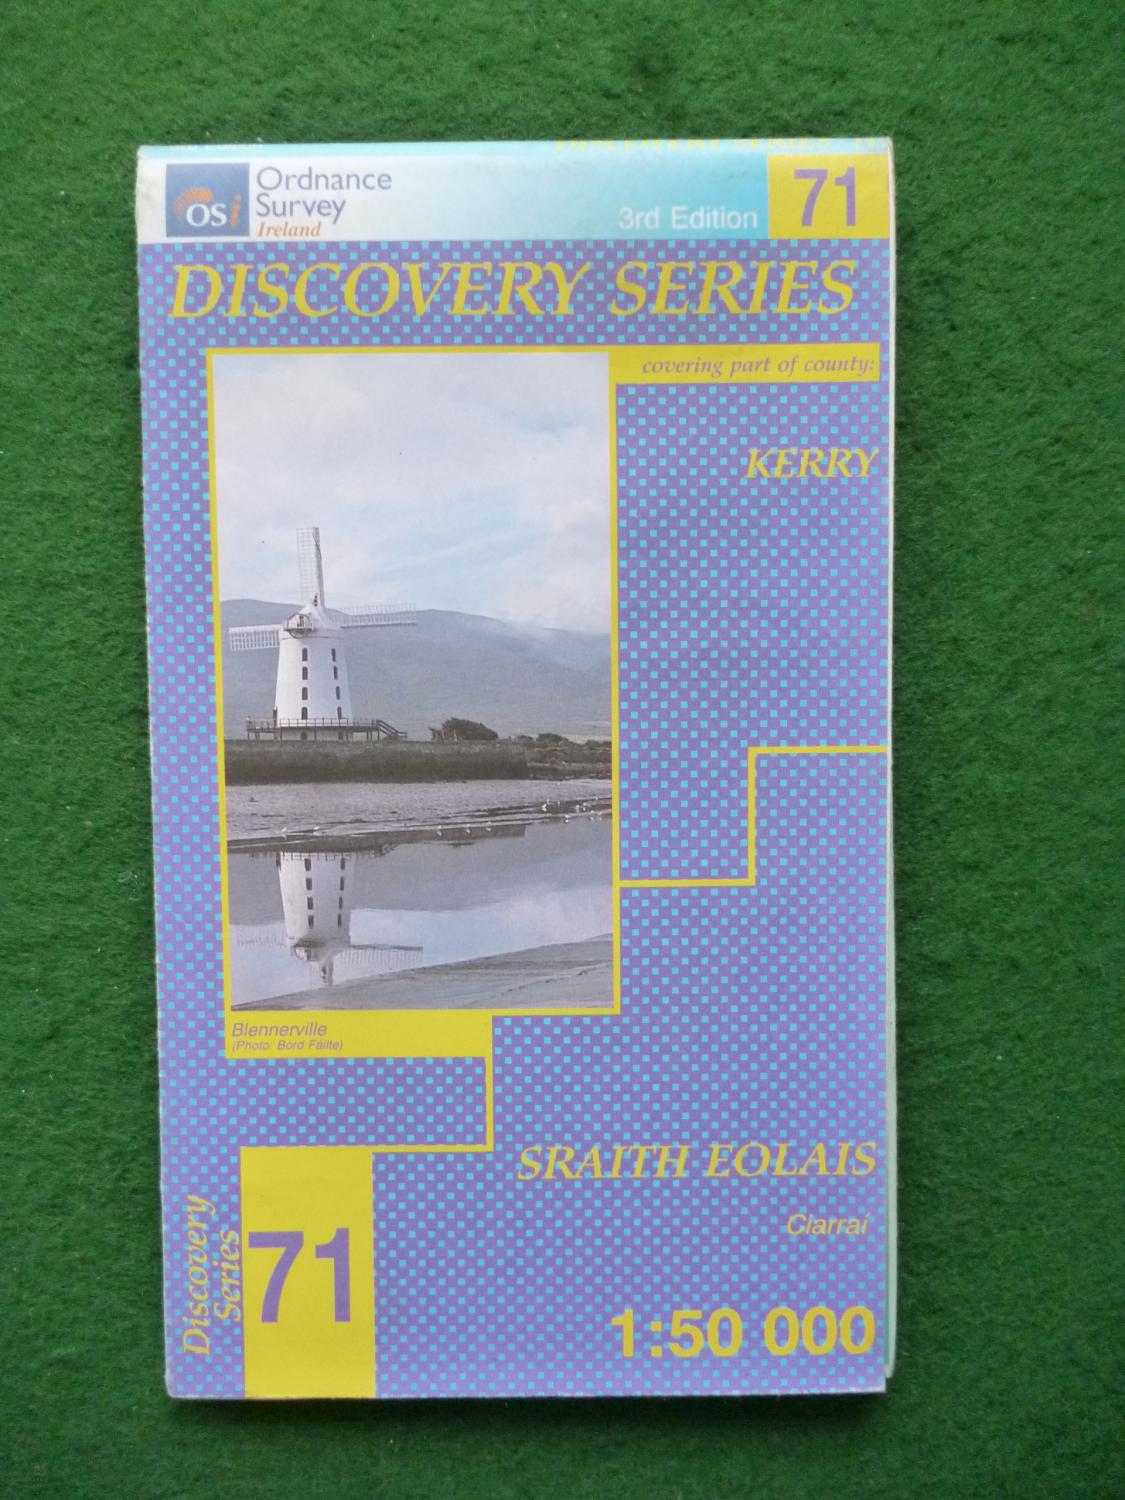 Discovery Series 71 Kerry - Ordnance Survey Ireland